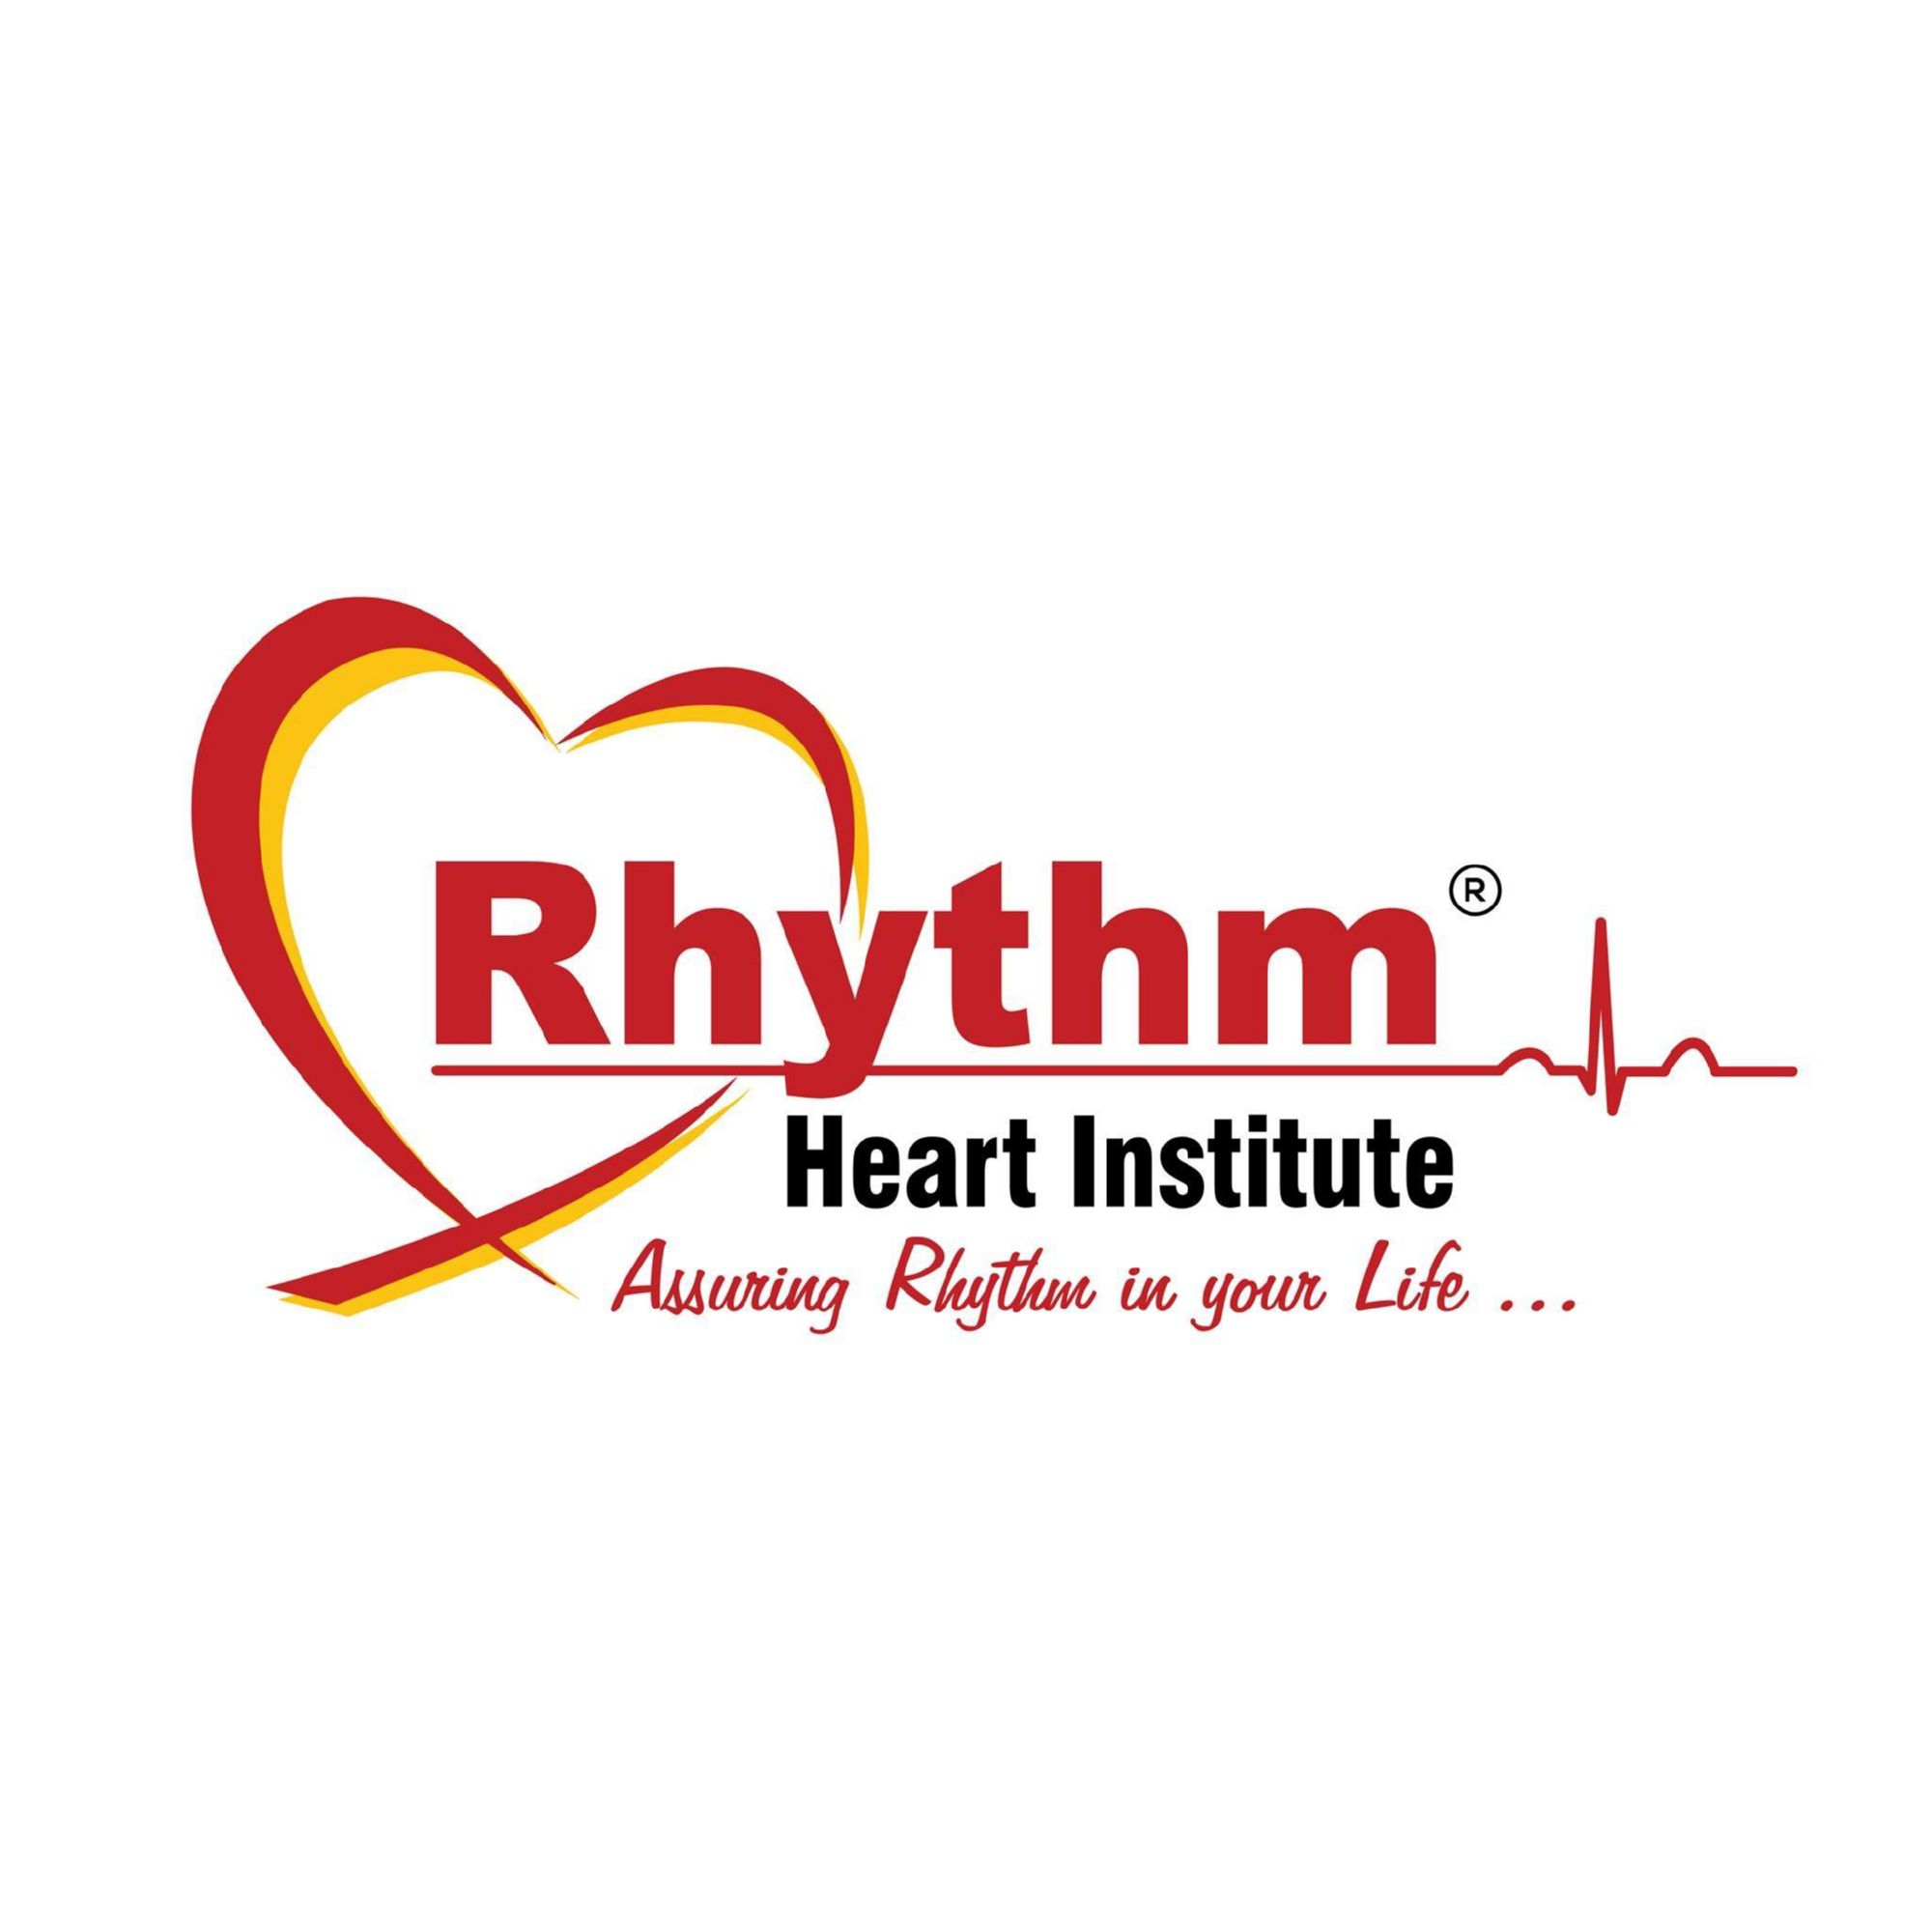 Rhythm Heart Institute|Clinics|Medical Services